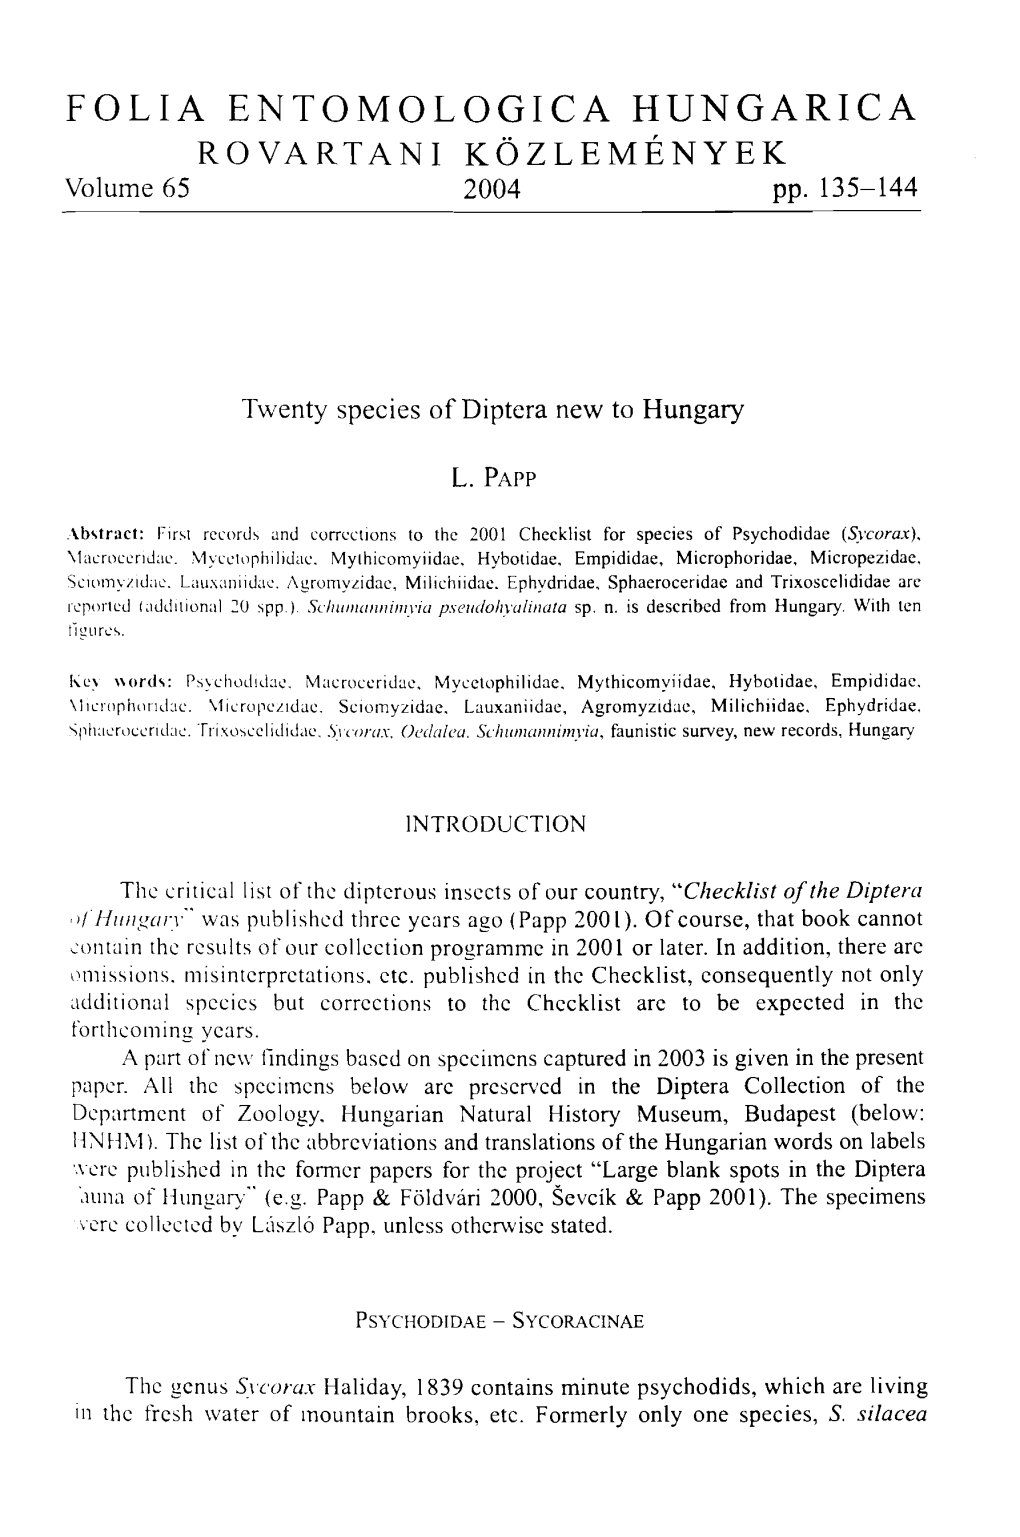 FOLIA ENTOMOLOGICA HUNGARICA ROVARTANI KOZLEMENYEK Volume 65 2004 Pp